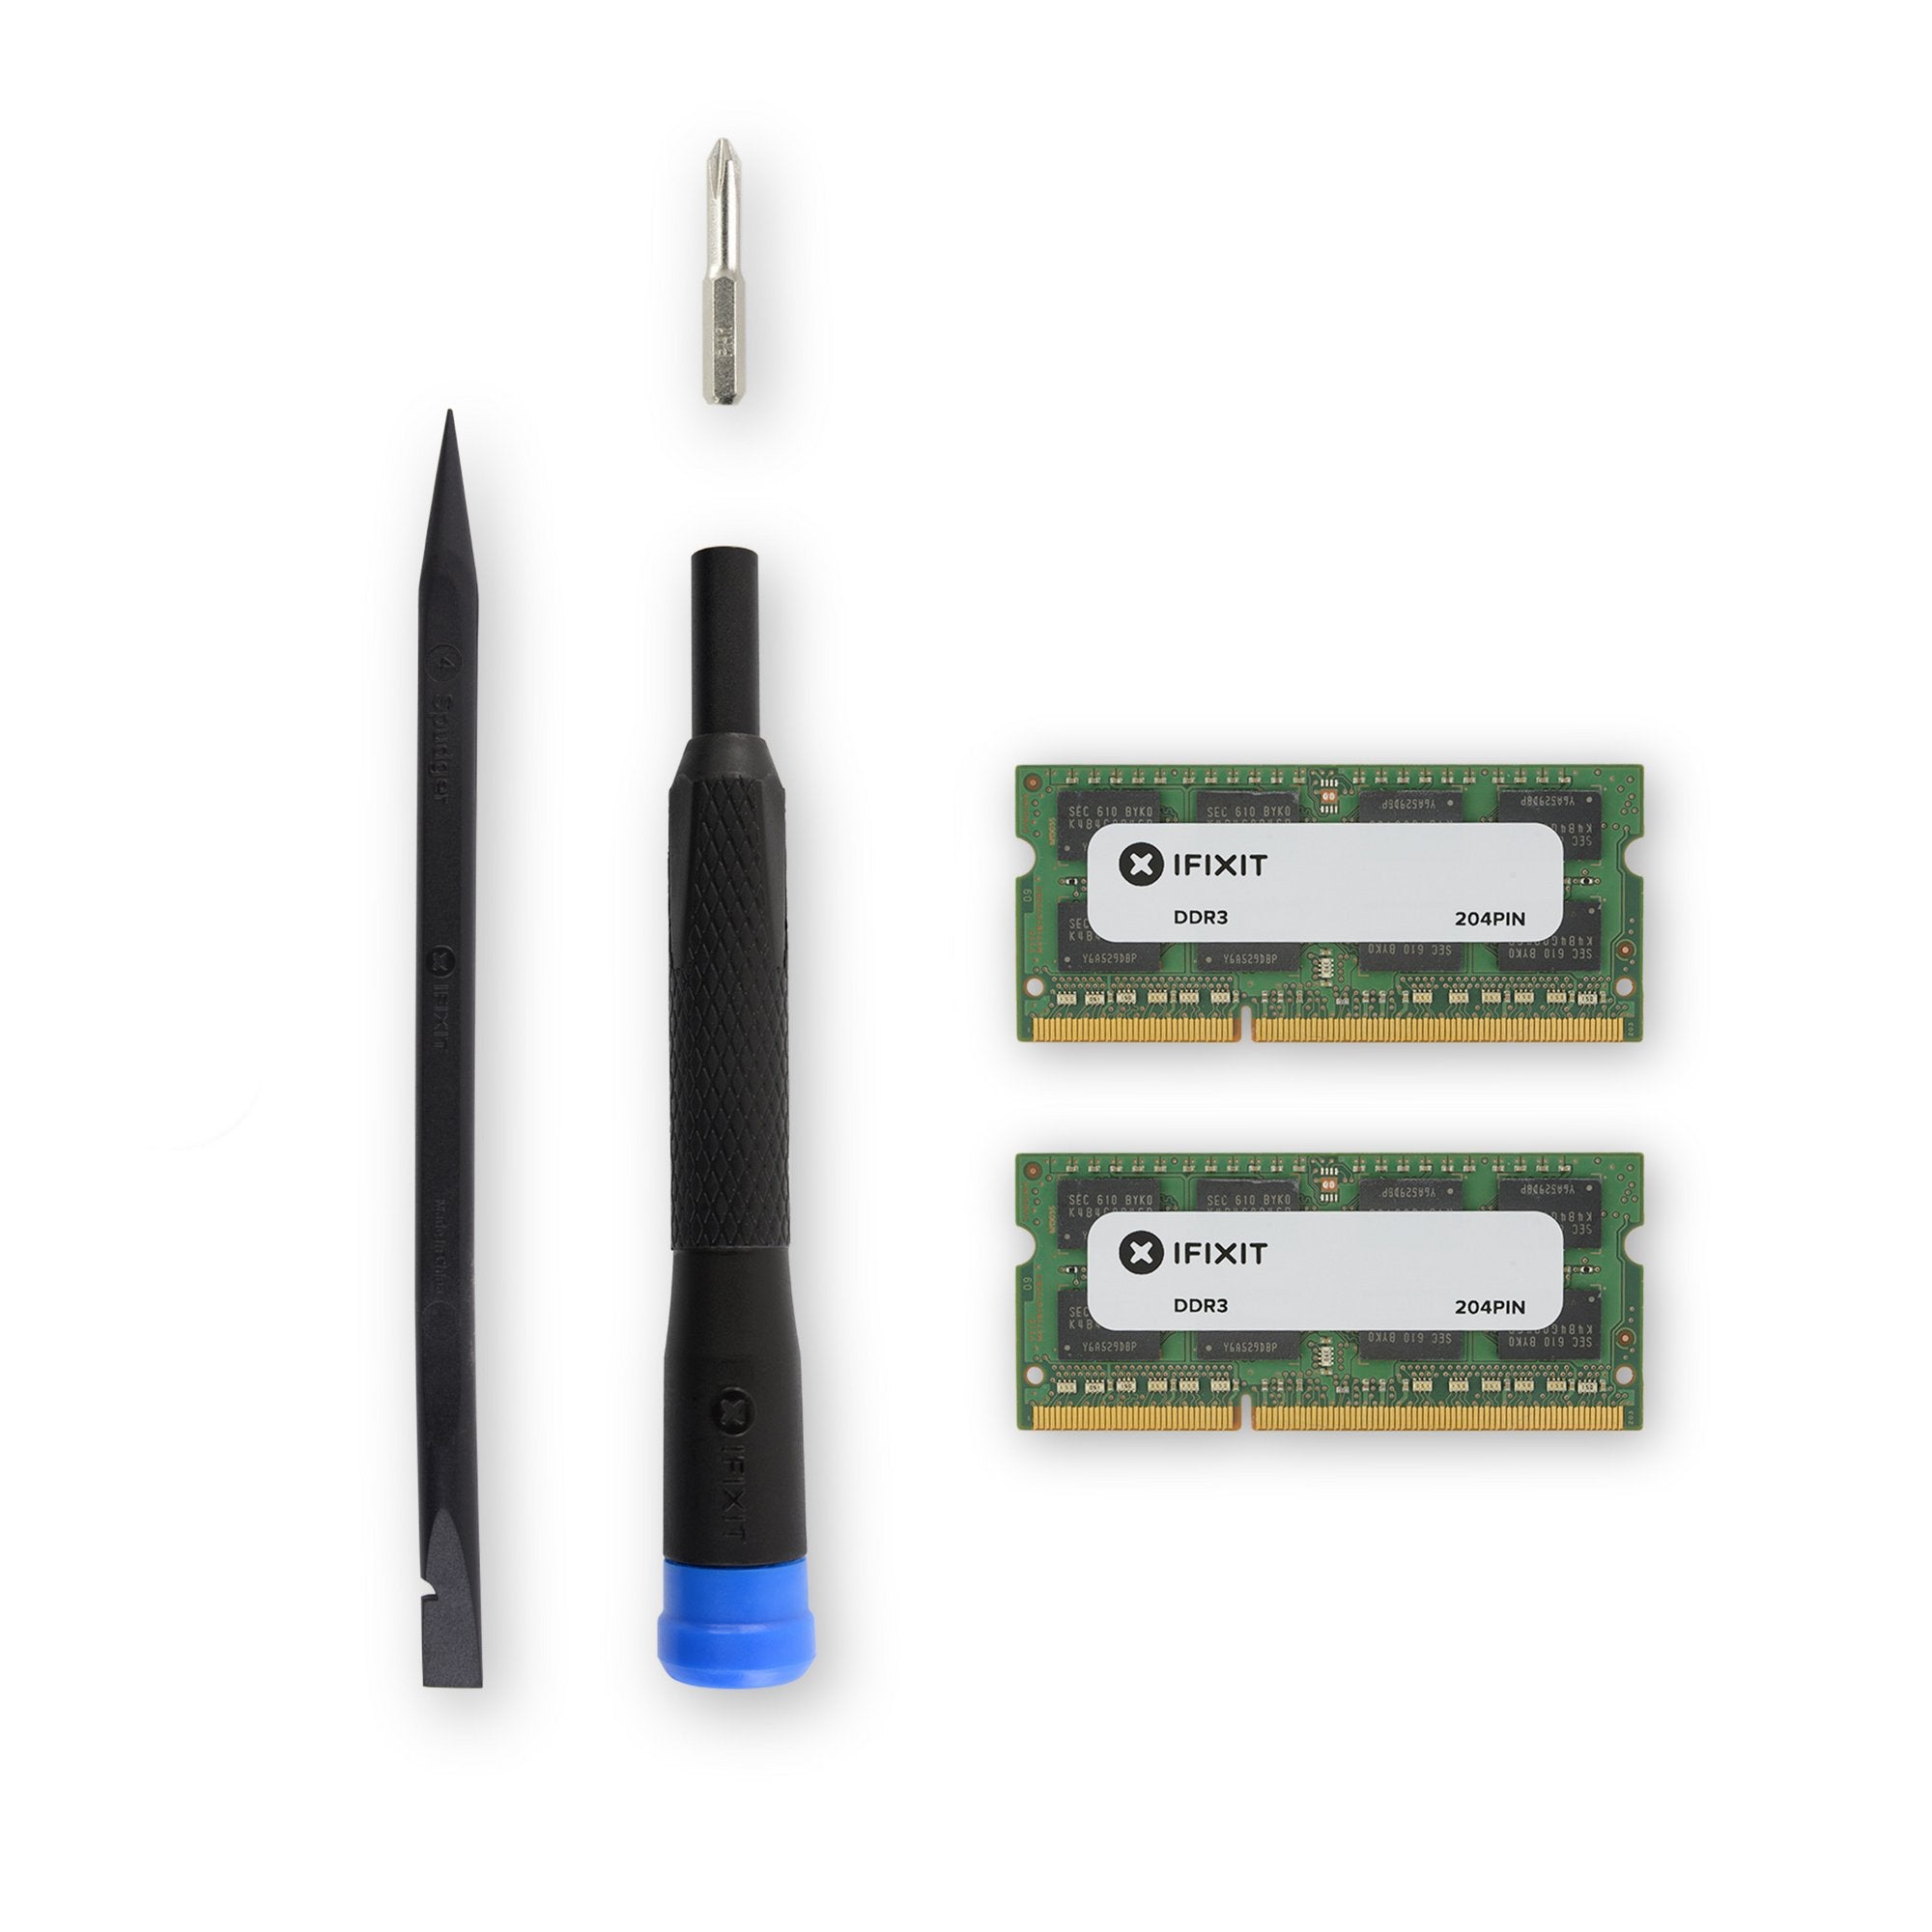 iMac Intel 20" (EDU) EMC 2316 (Mid 2009) Memory Maxxer RAM Upgrade Kit